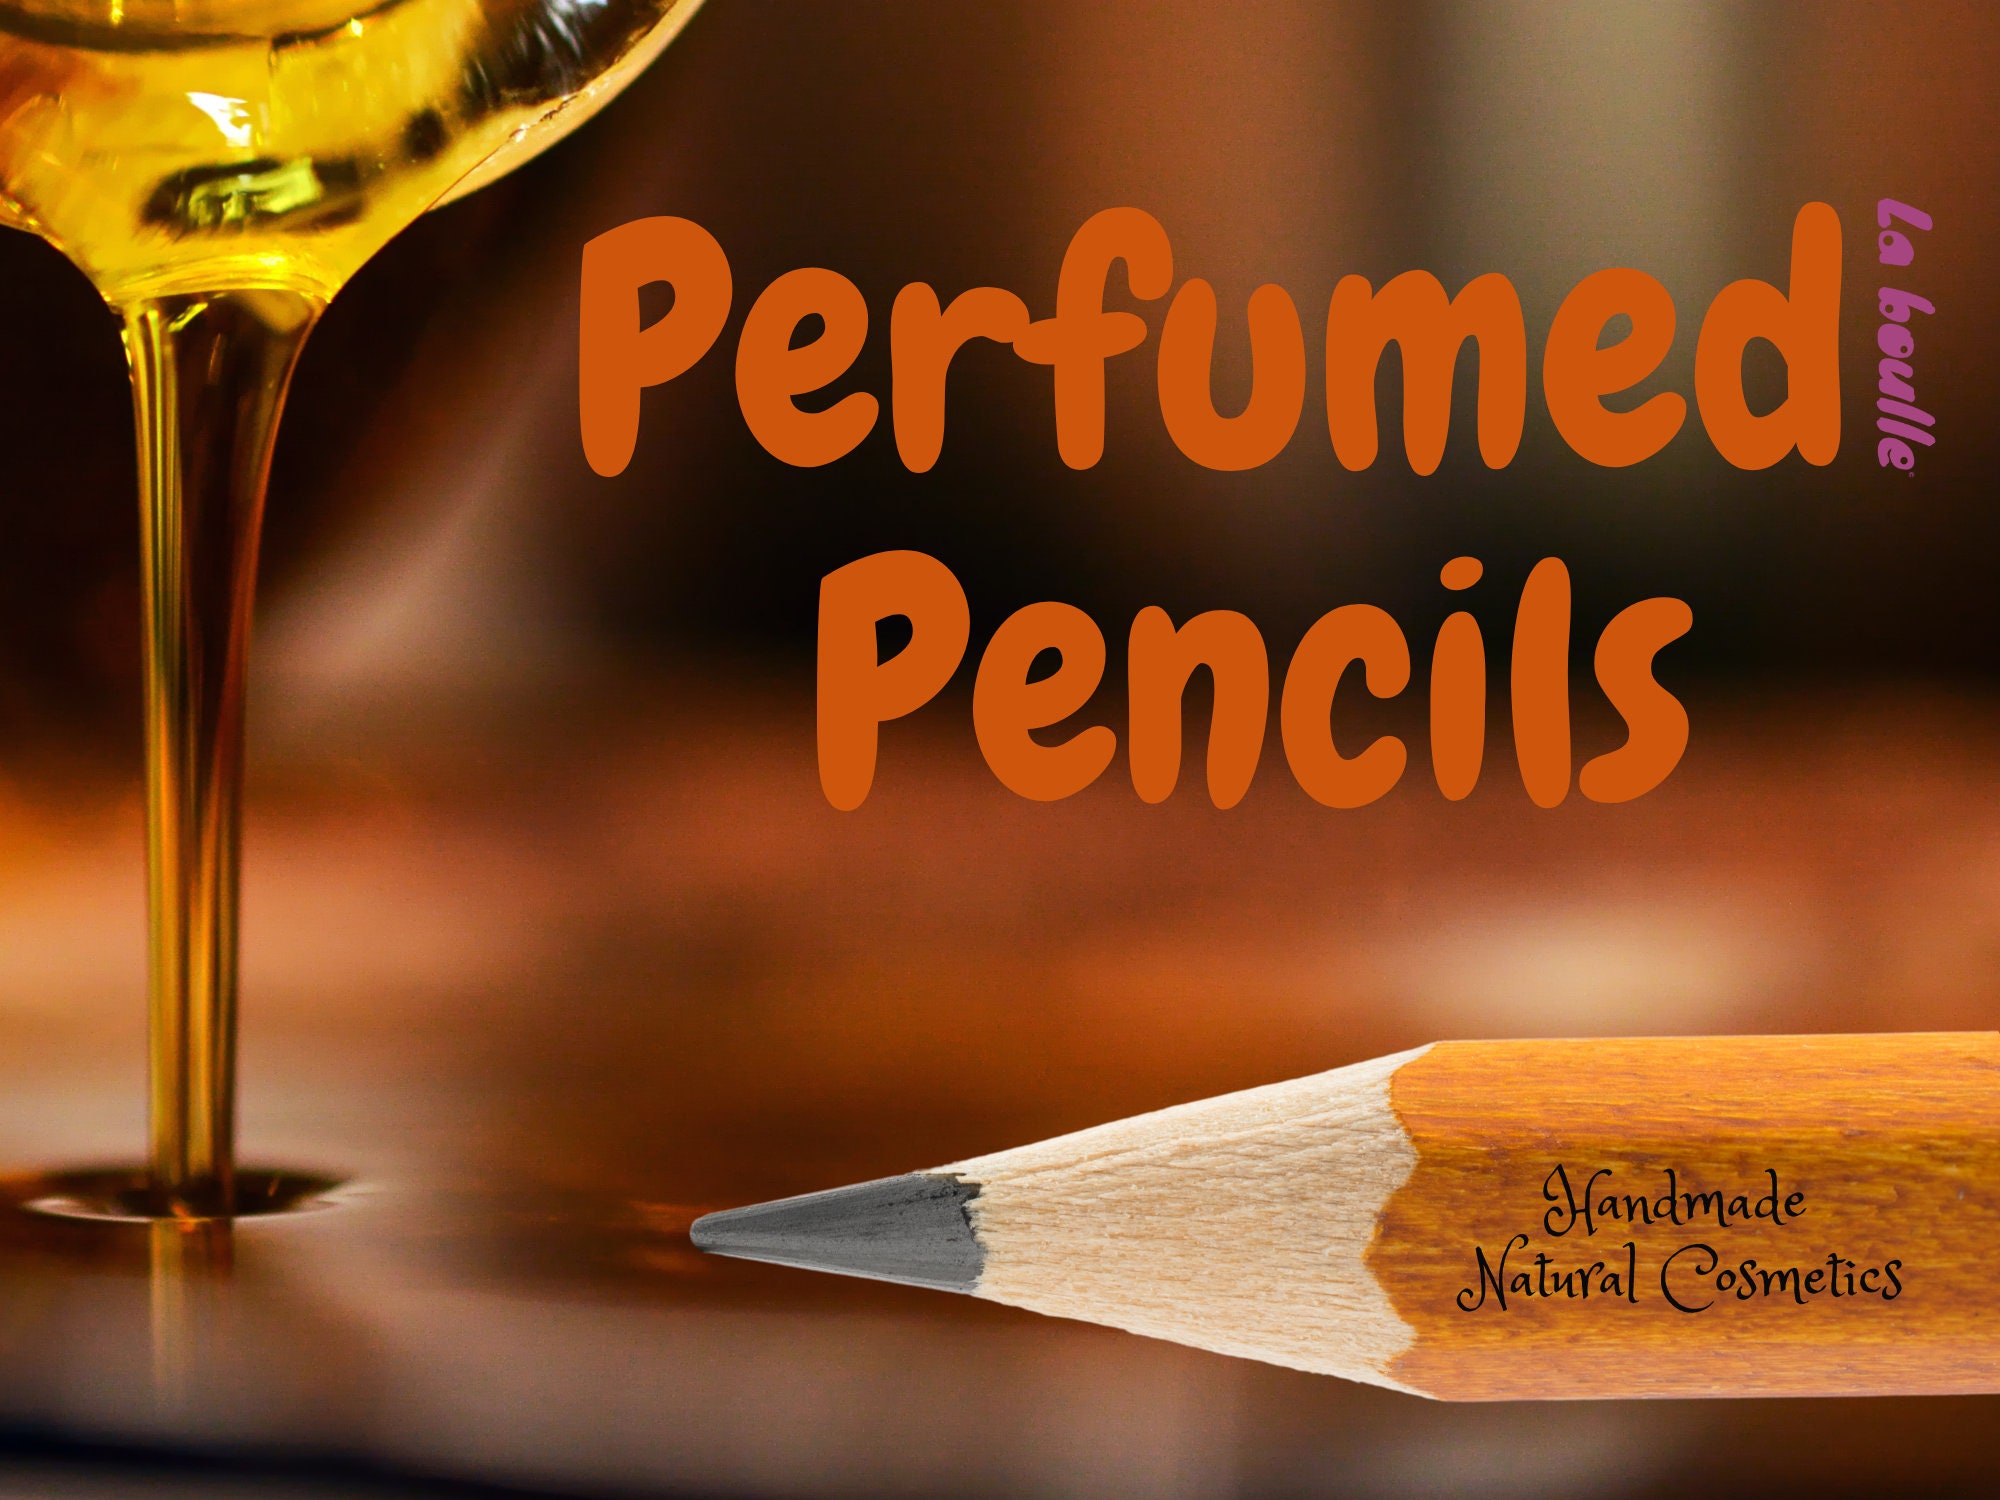 Everlasting Pencil, Inkless Pencil, Retractable, Leadless Pencil